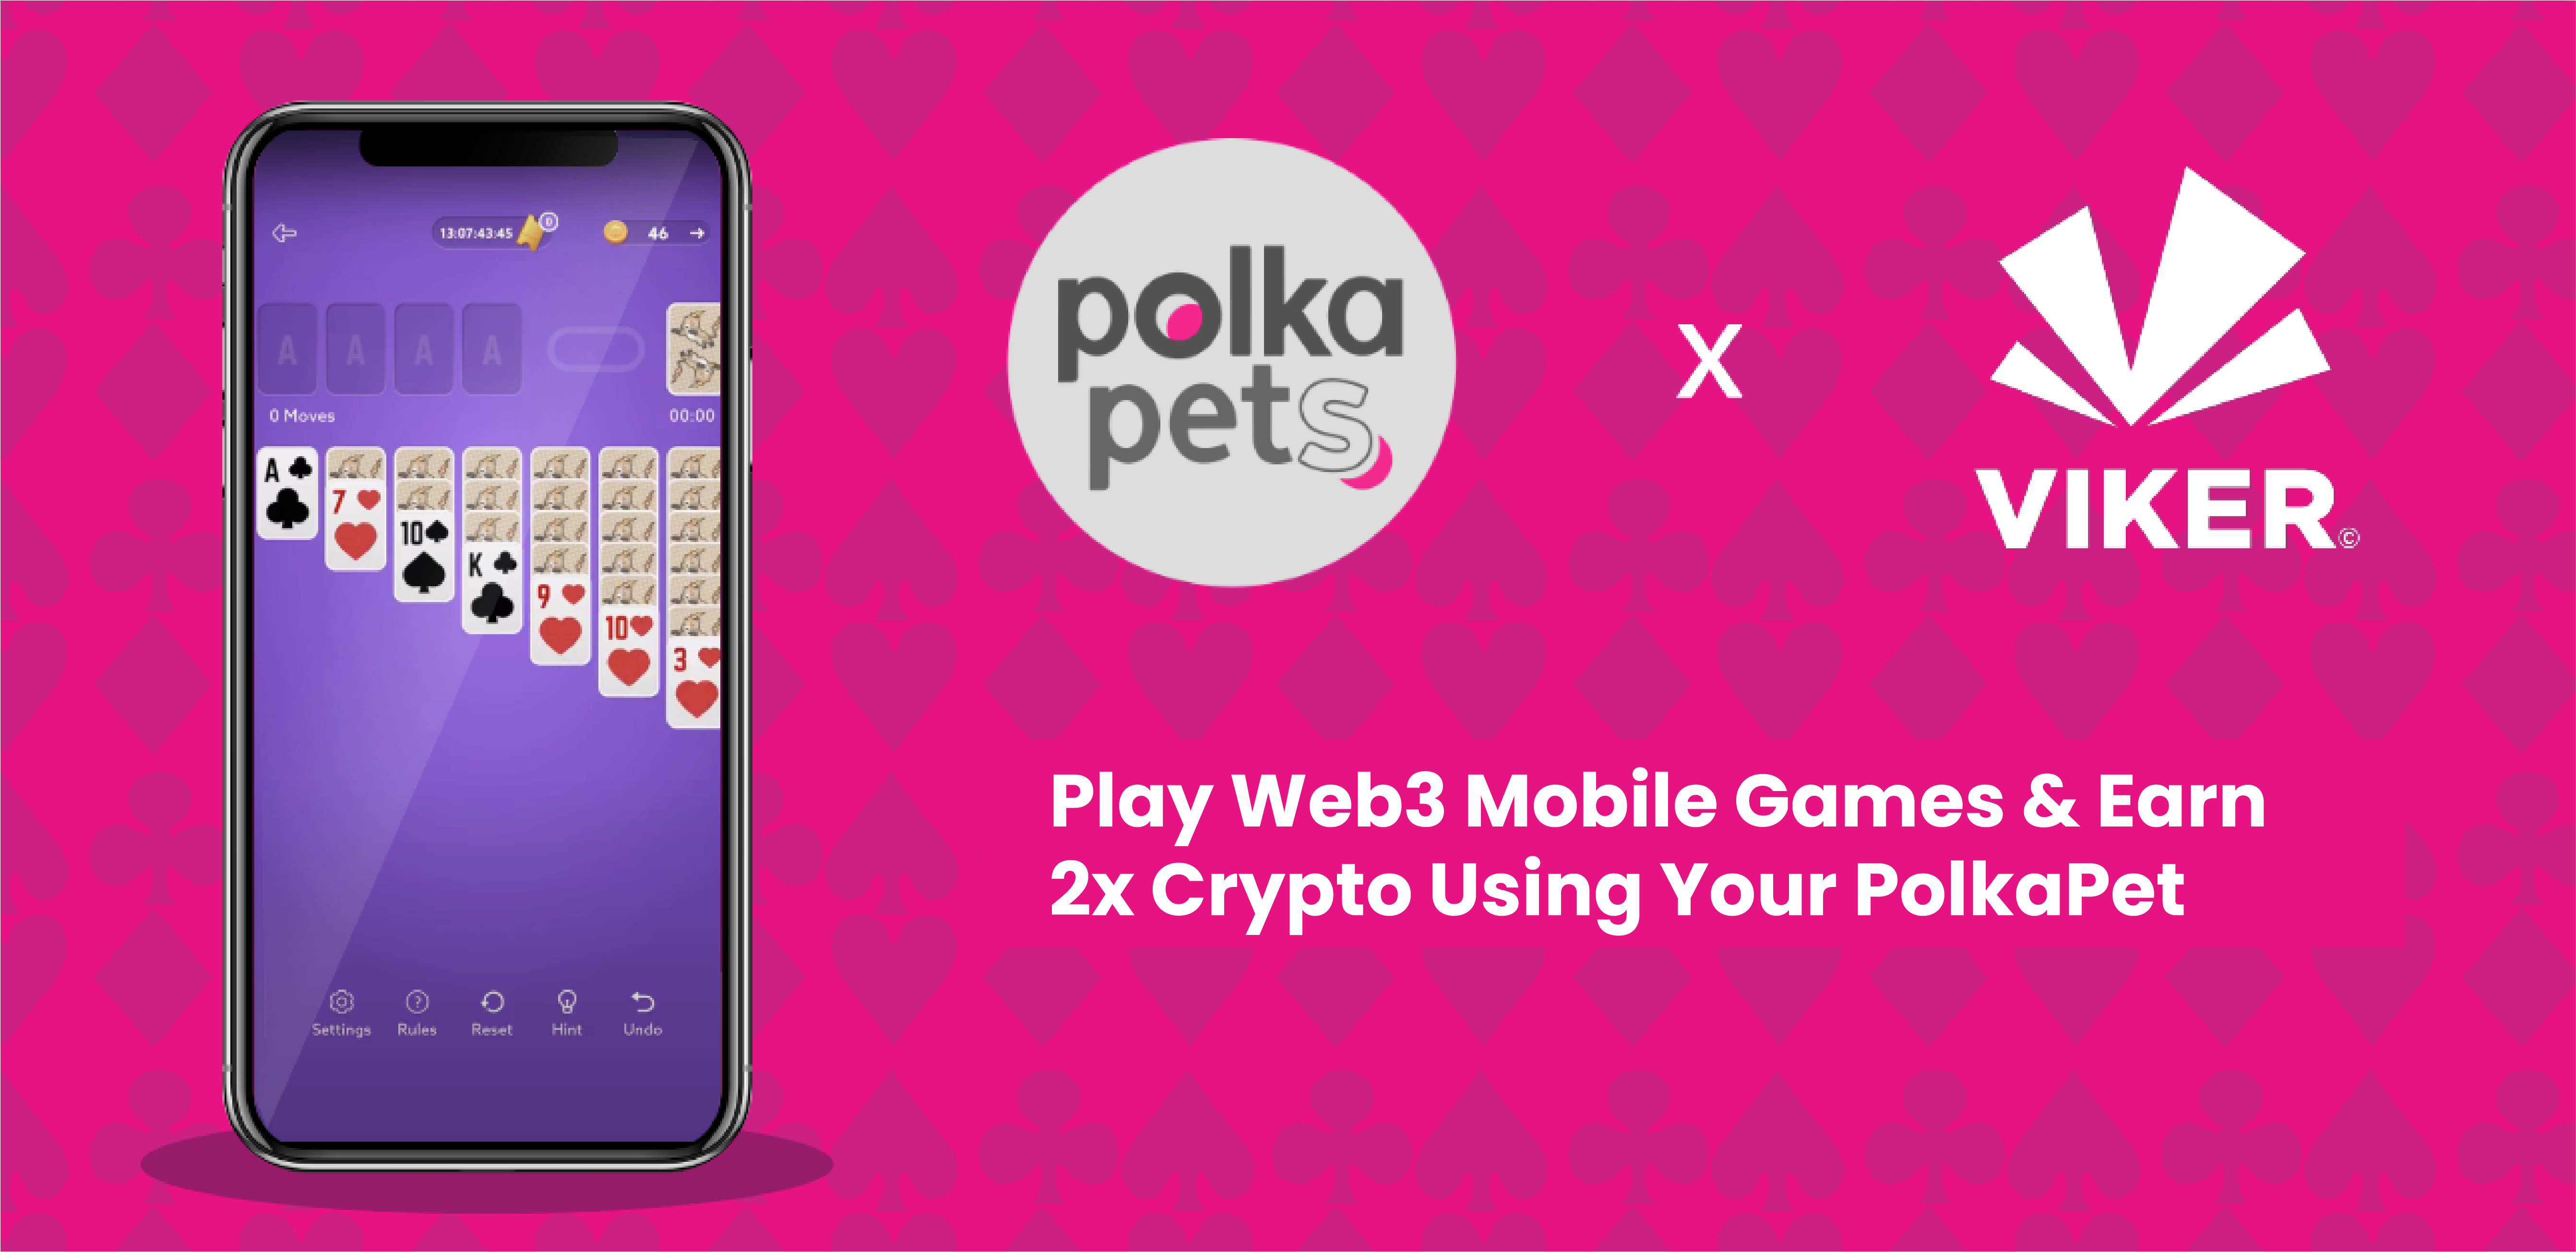 PolkaPets and VIKER Games Announce $5k Web3 Mobile Gaming Tournament